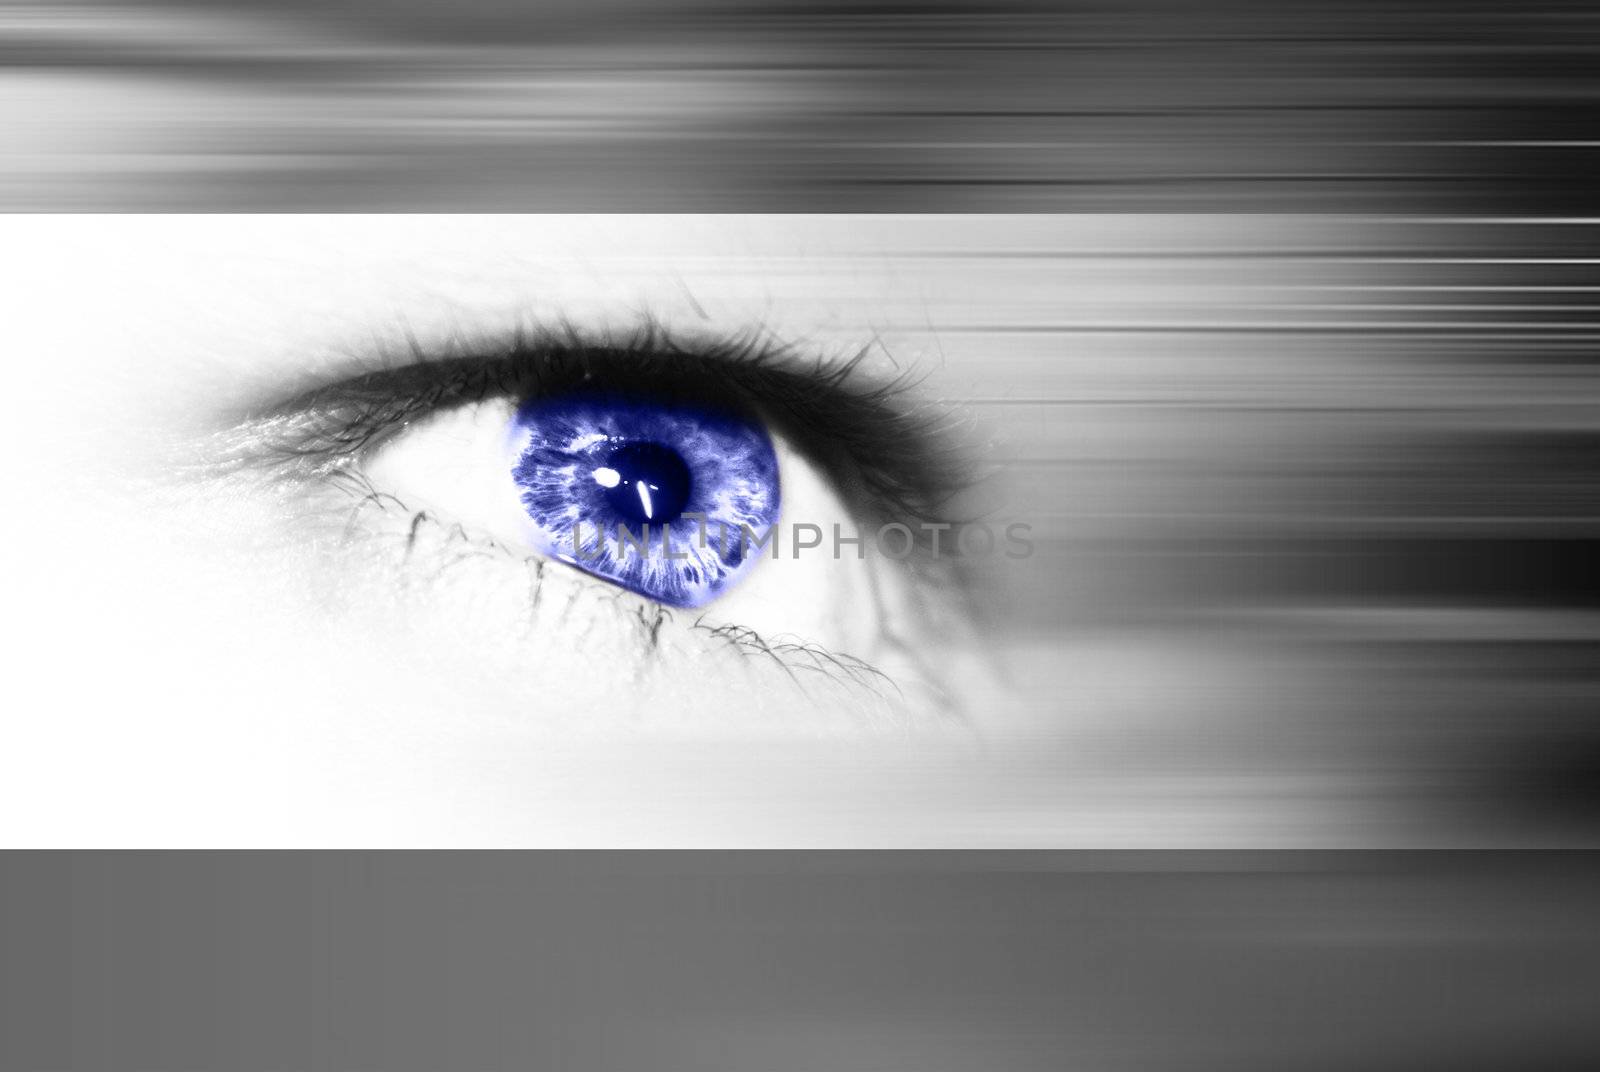 Digital eye in a future vision 